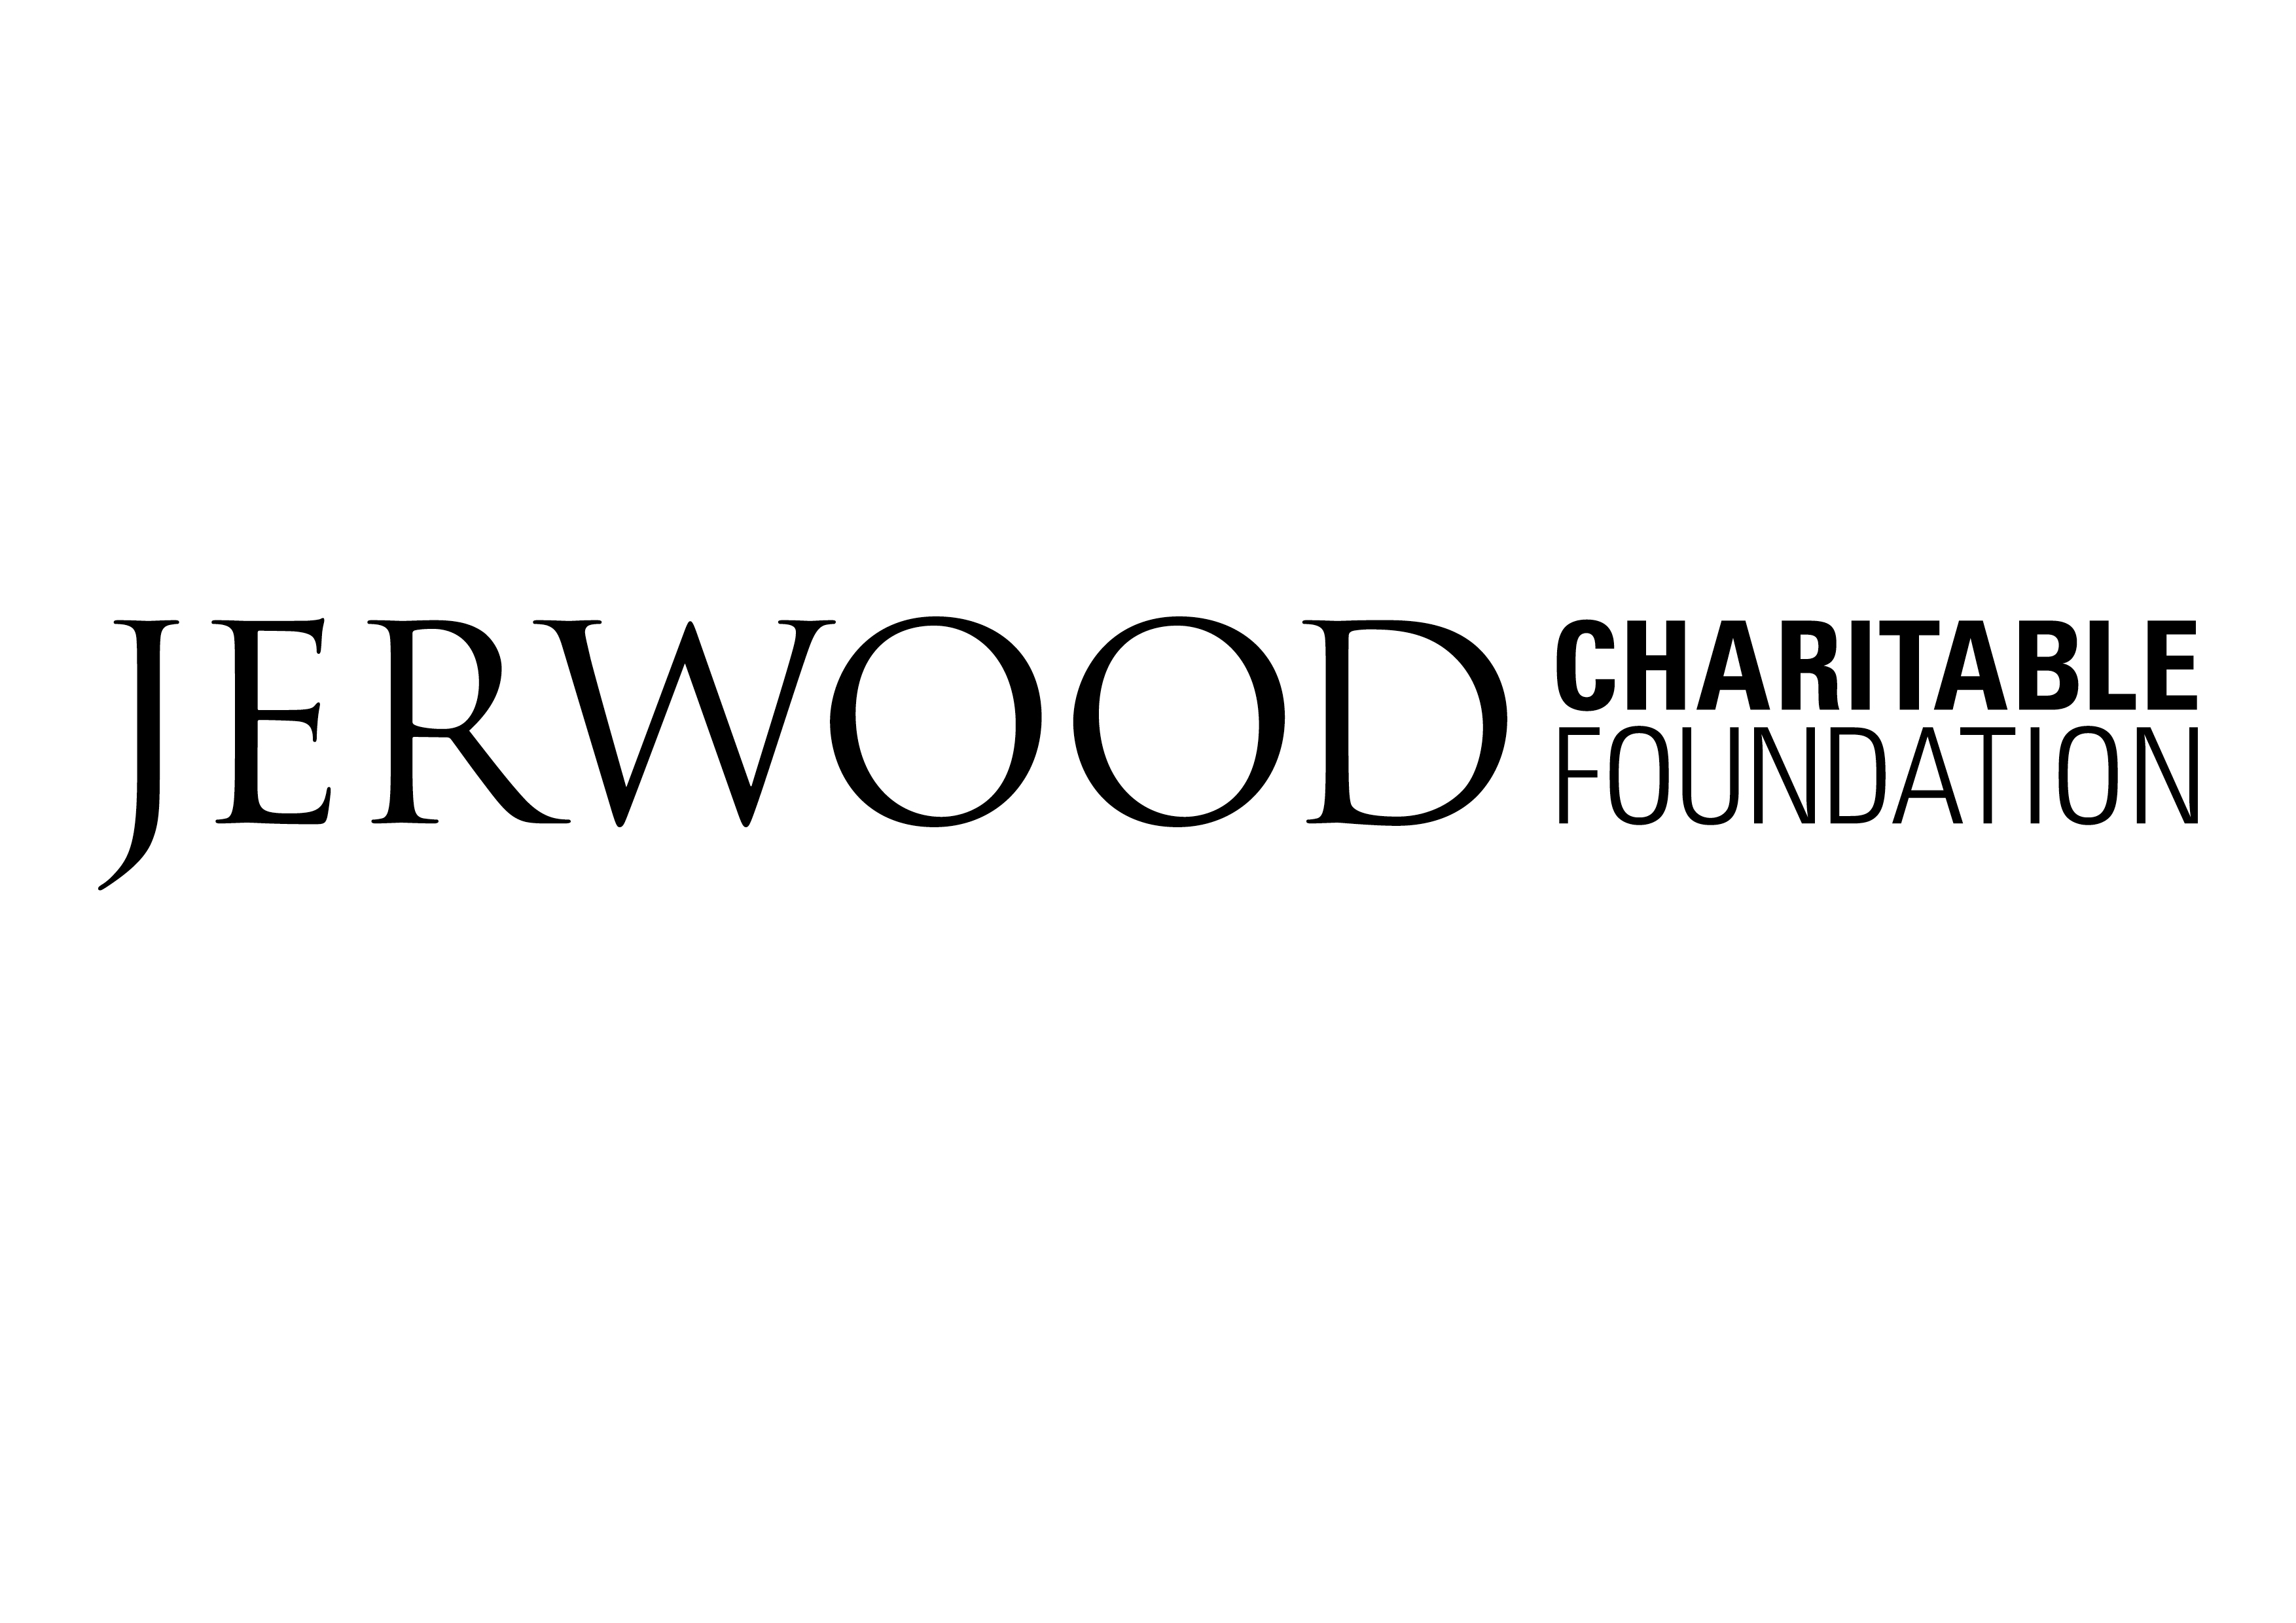 Jerwood Charitable Foundation logo